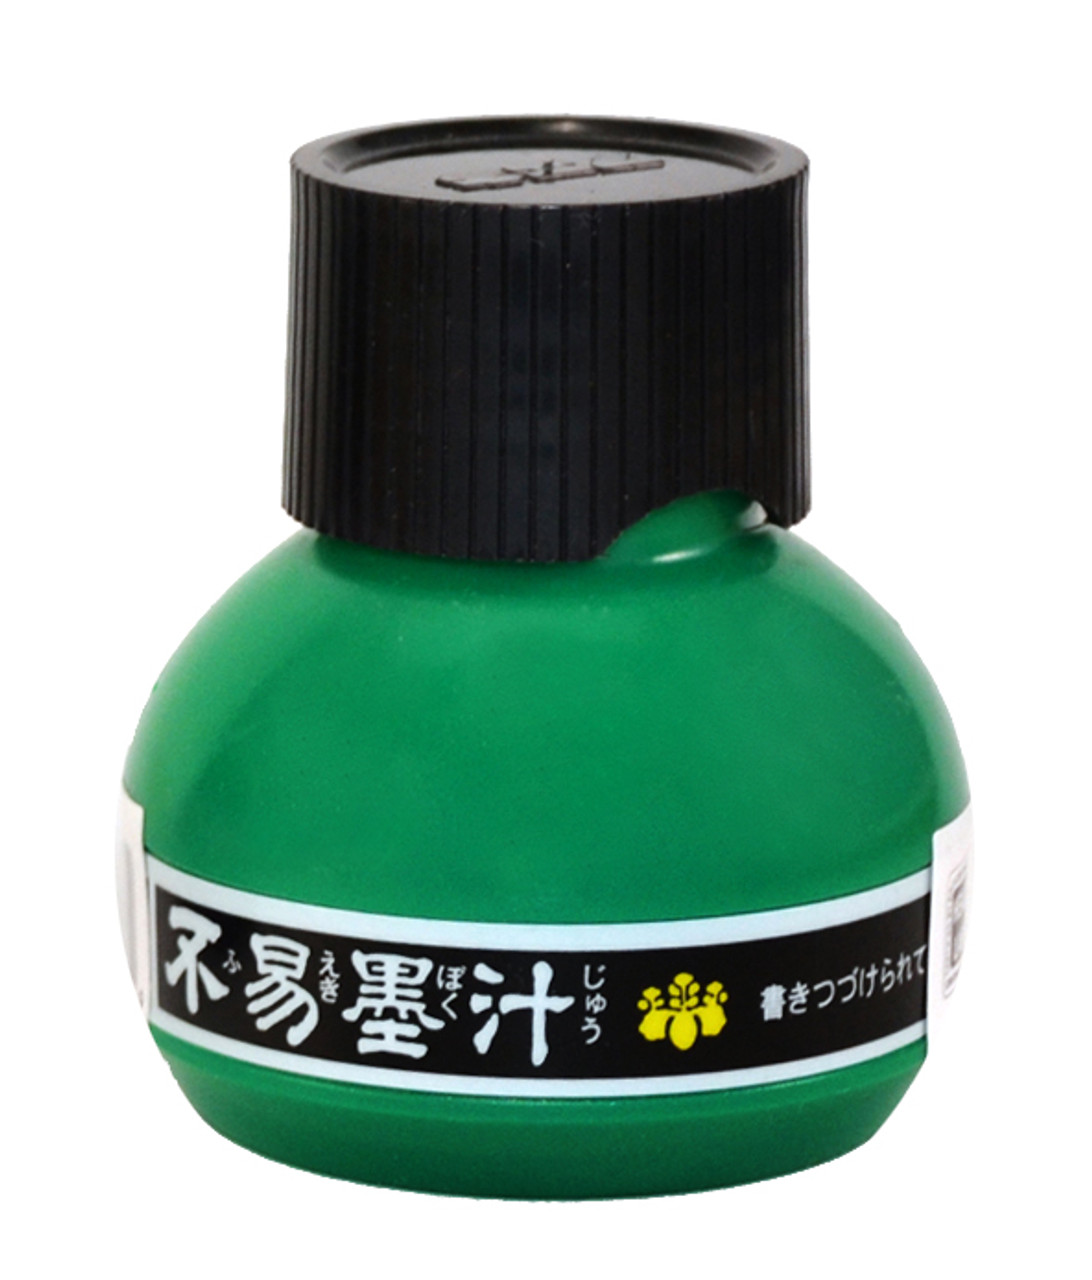 Yasutomo Liquid Sumi Ink, 6 oz., Black Gloss